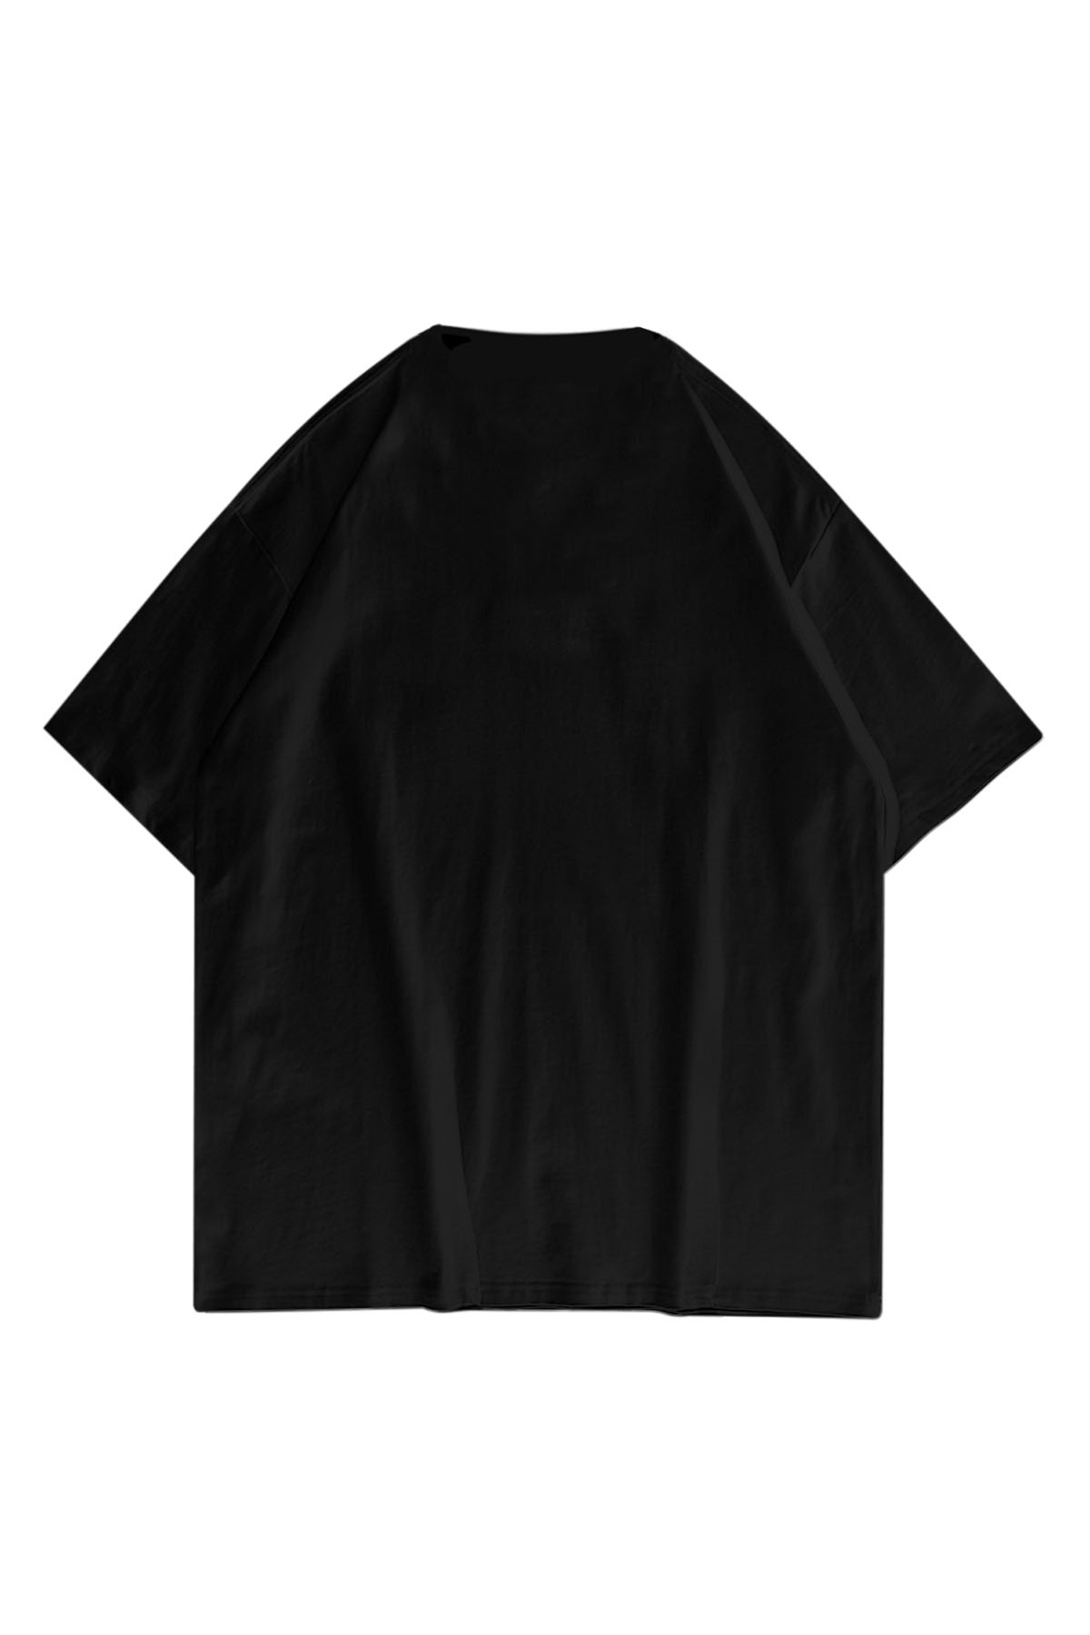 Trendiz Unisex Arizona Befearless Siyah Tshirt